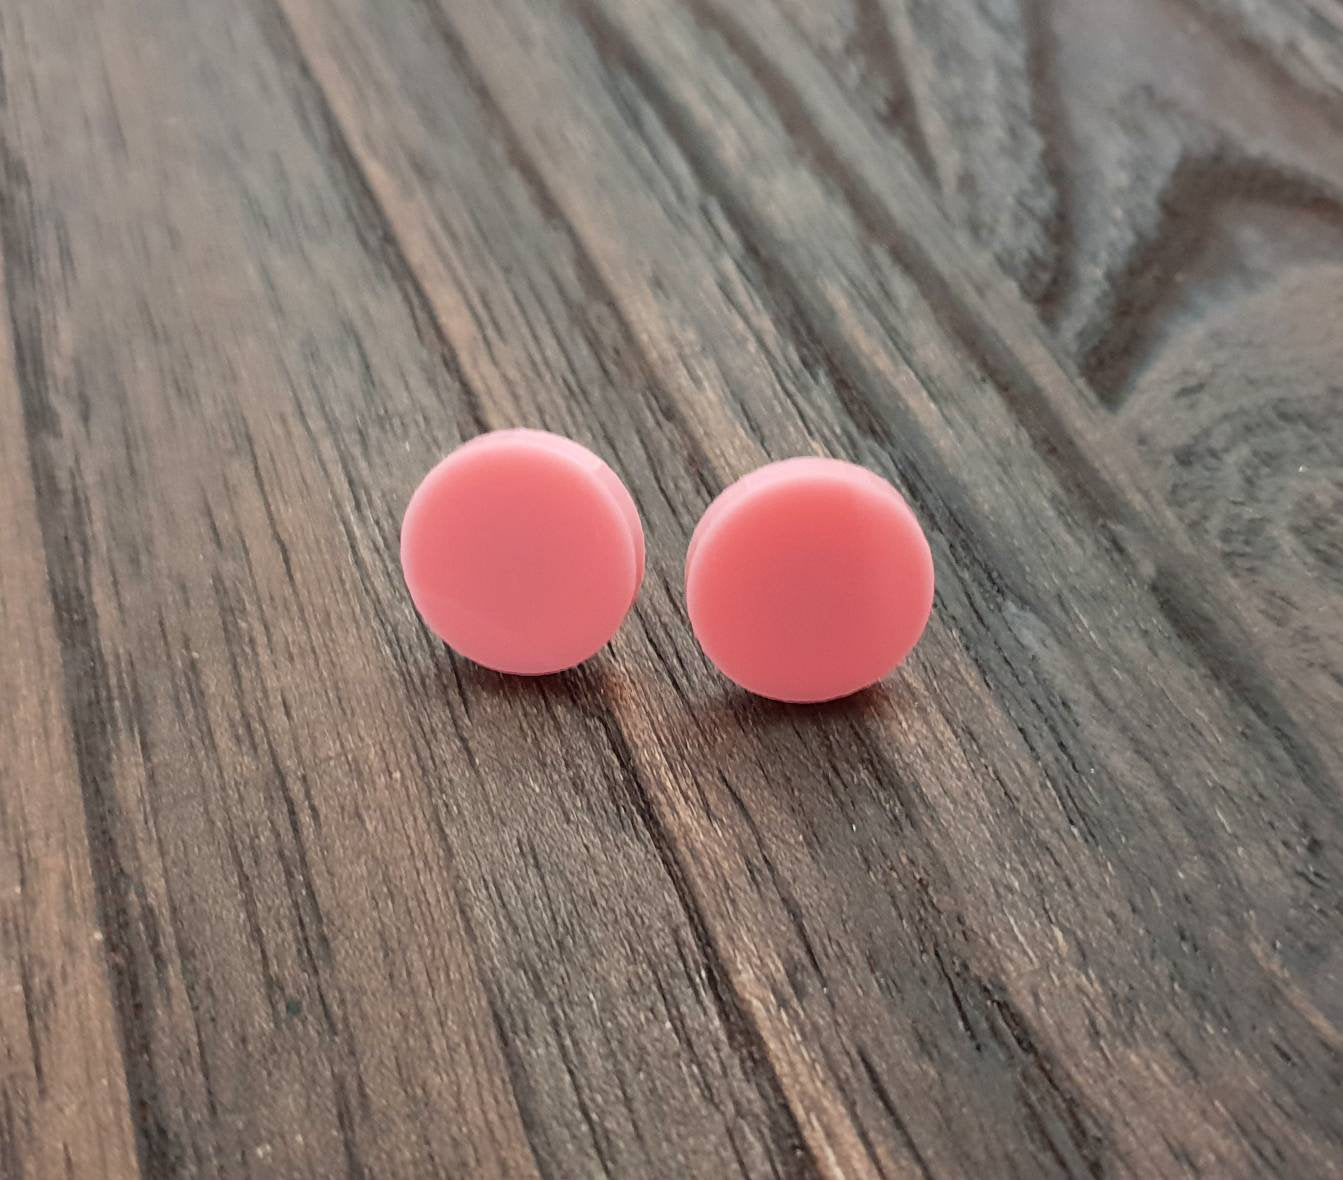 Raspberry Sherbet Circle Stud Earrings, Acrylic Earrings, Stainless Steel Earrings. Light Pink earrings